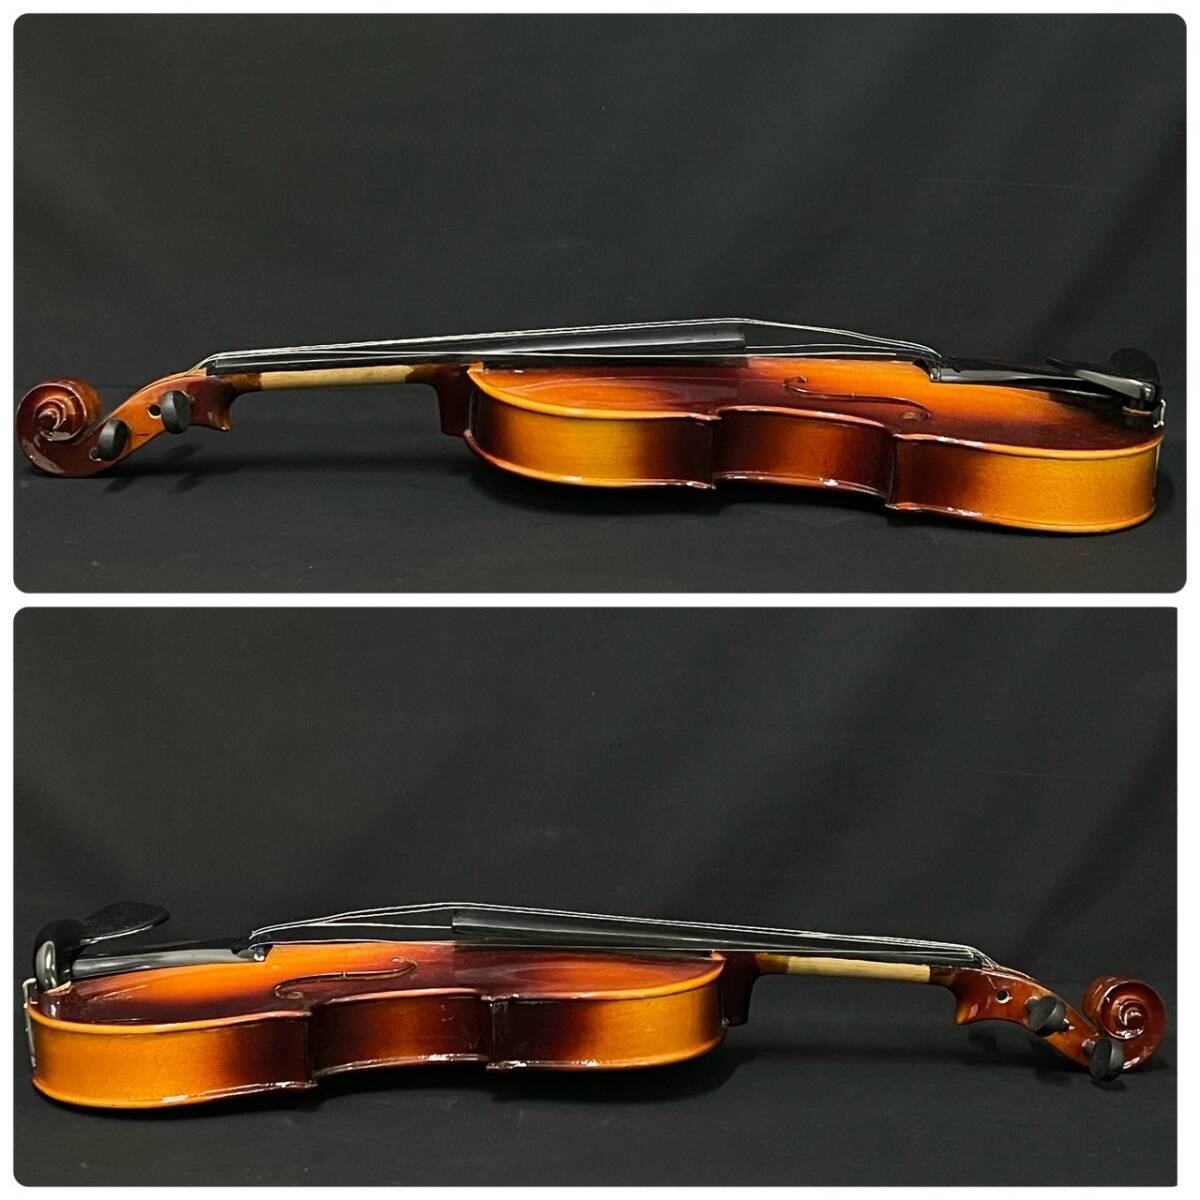 BCg311I 120 Bestler ベスラー ヴァイオリン 上海 中国 茶色 ハードケース 弓 あご当て 付 バイオリン 弦楽器 楽器 Shanghaiの画像5